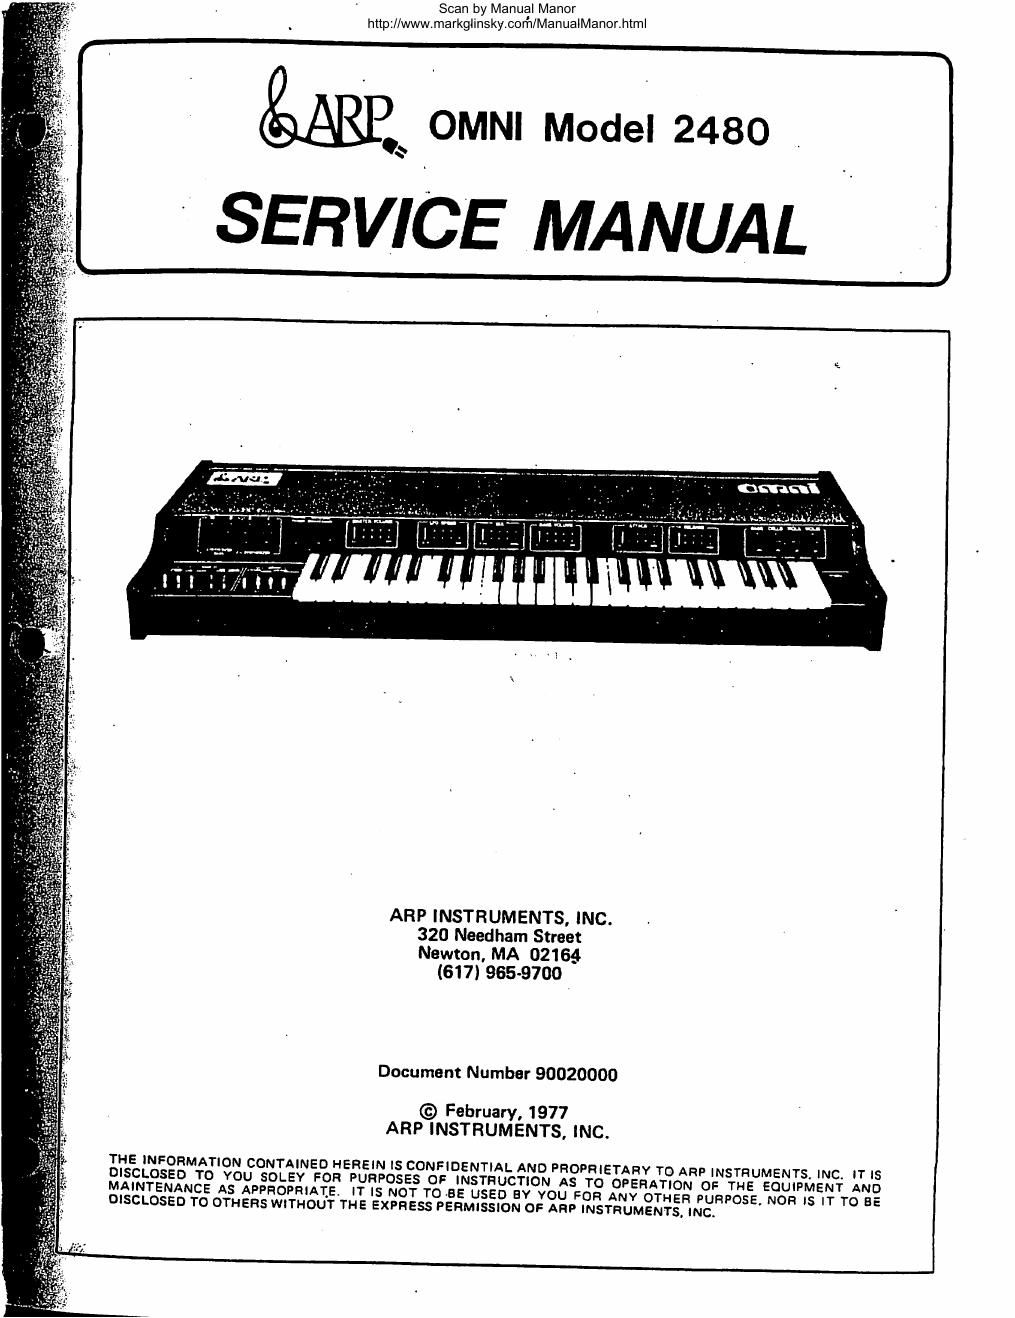 arp omni service manual